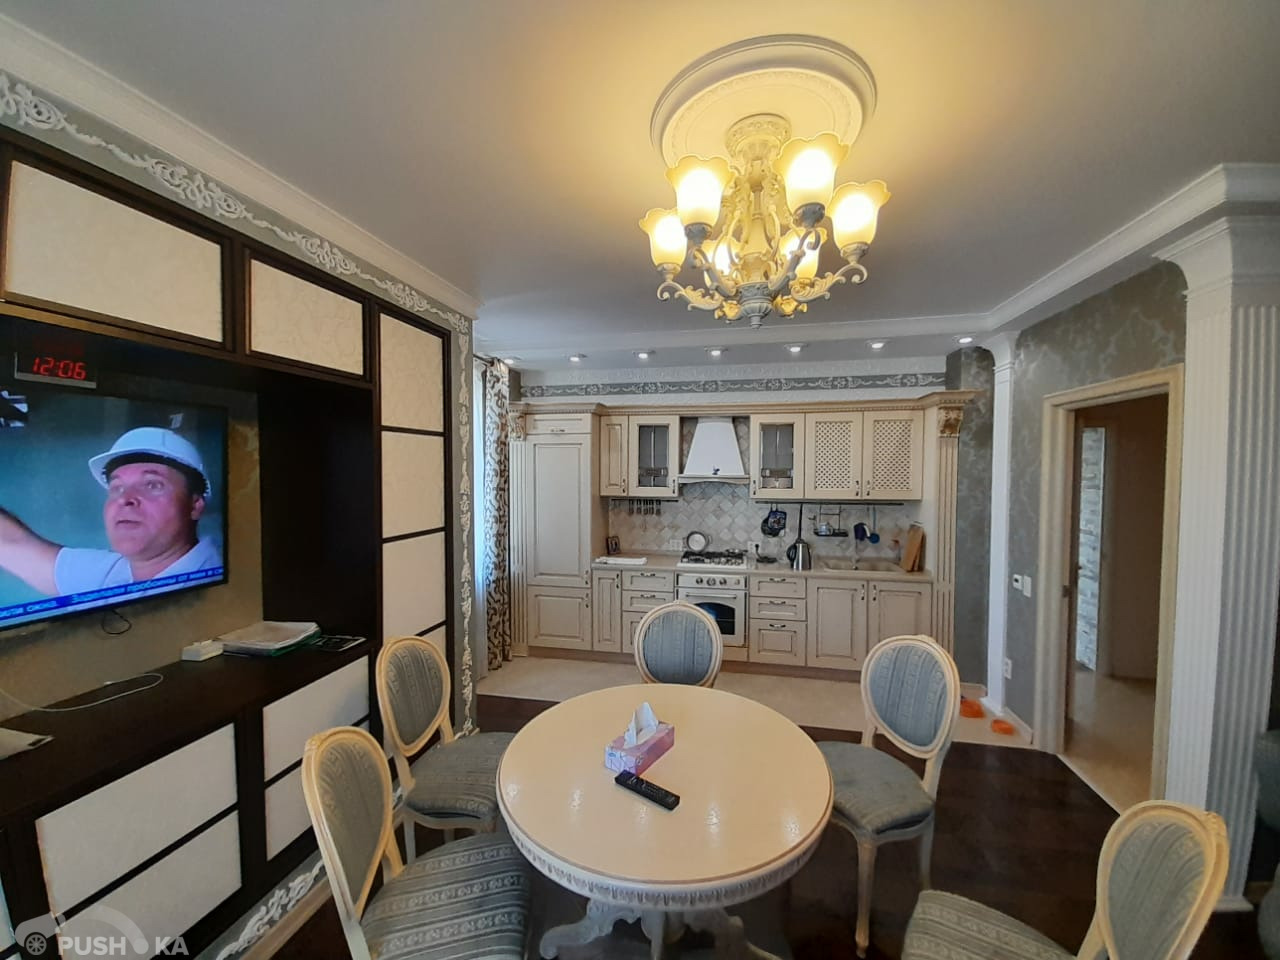 Продаётся 1-комнатная квартира 65.0 кв.м. этаж 8/9 за 7 000 000 руб 